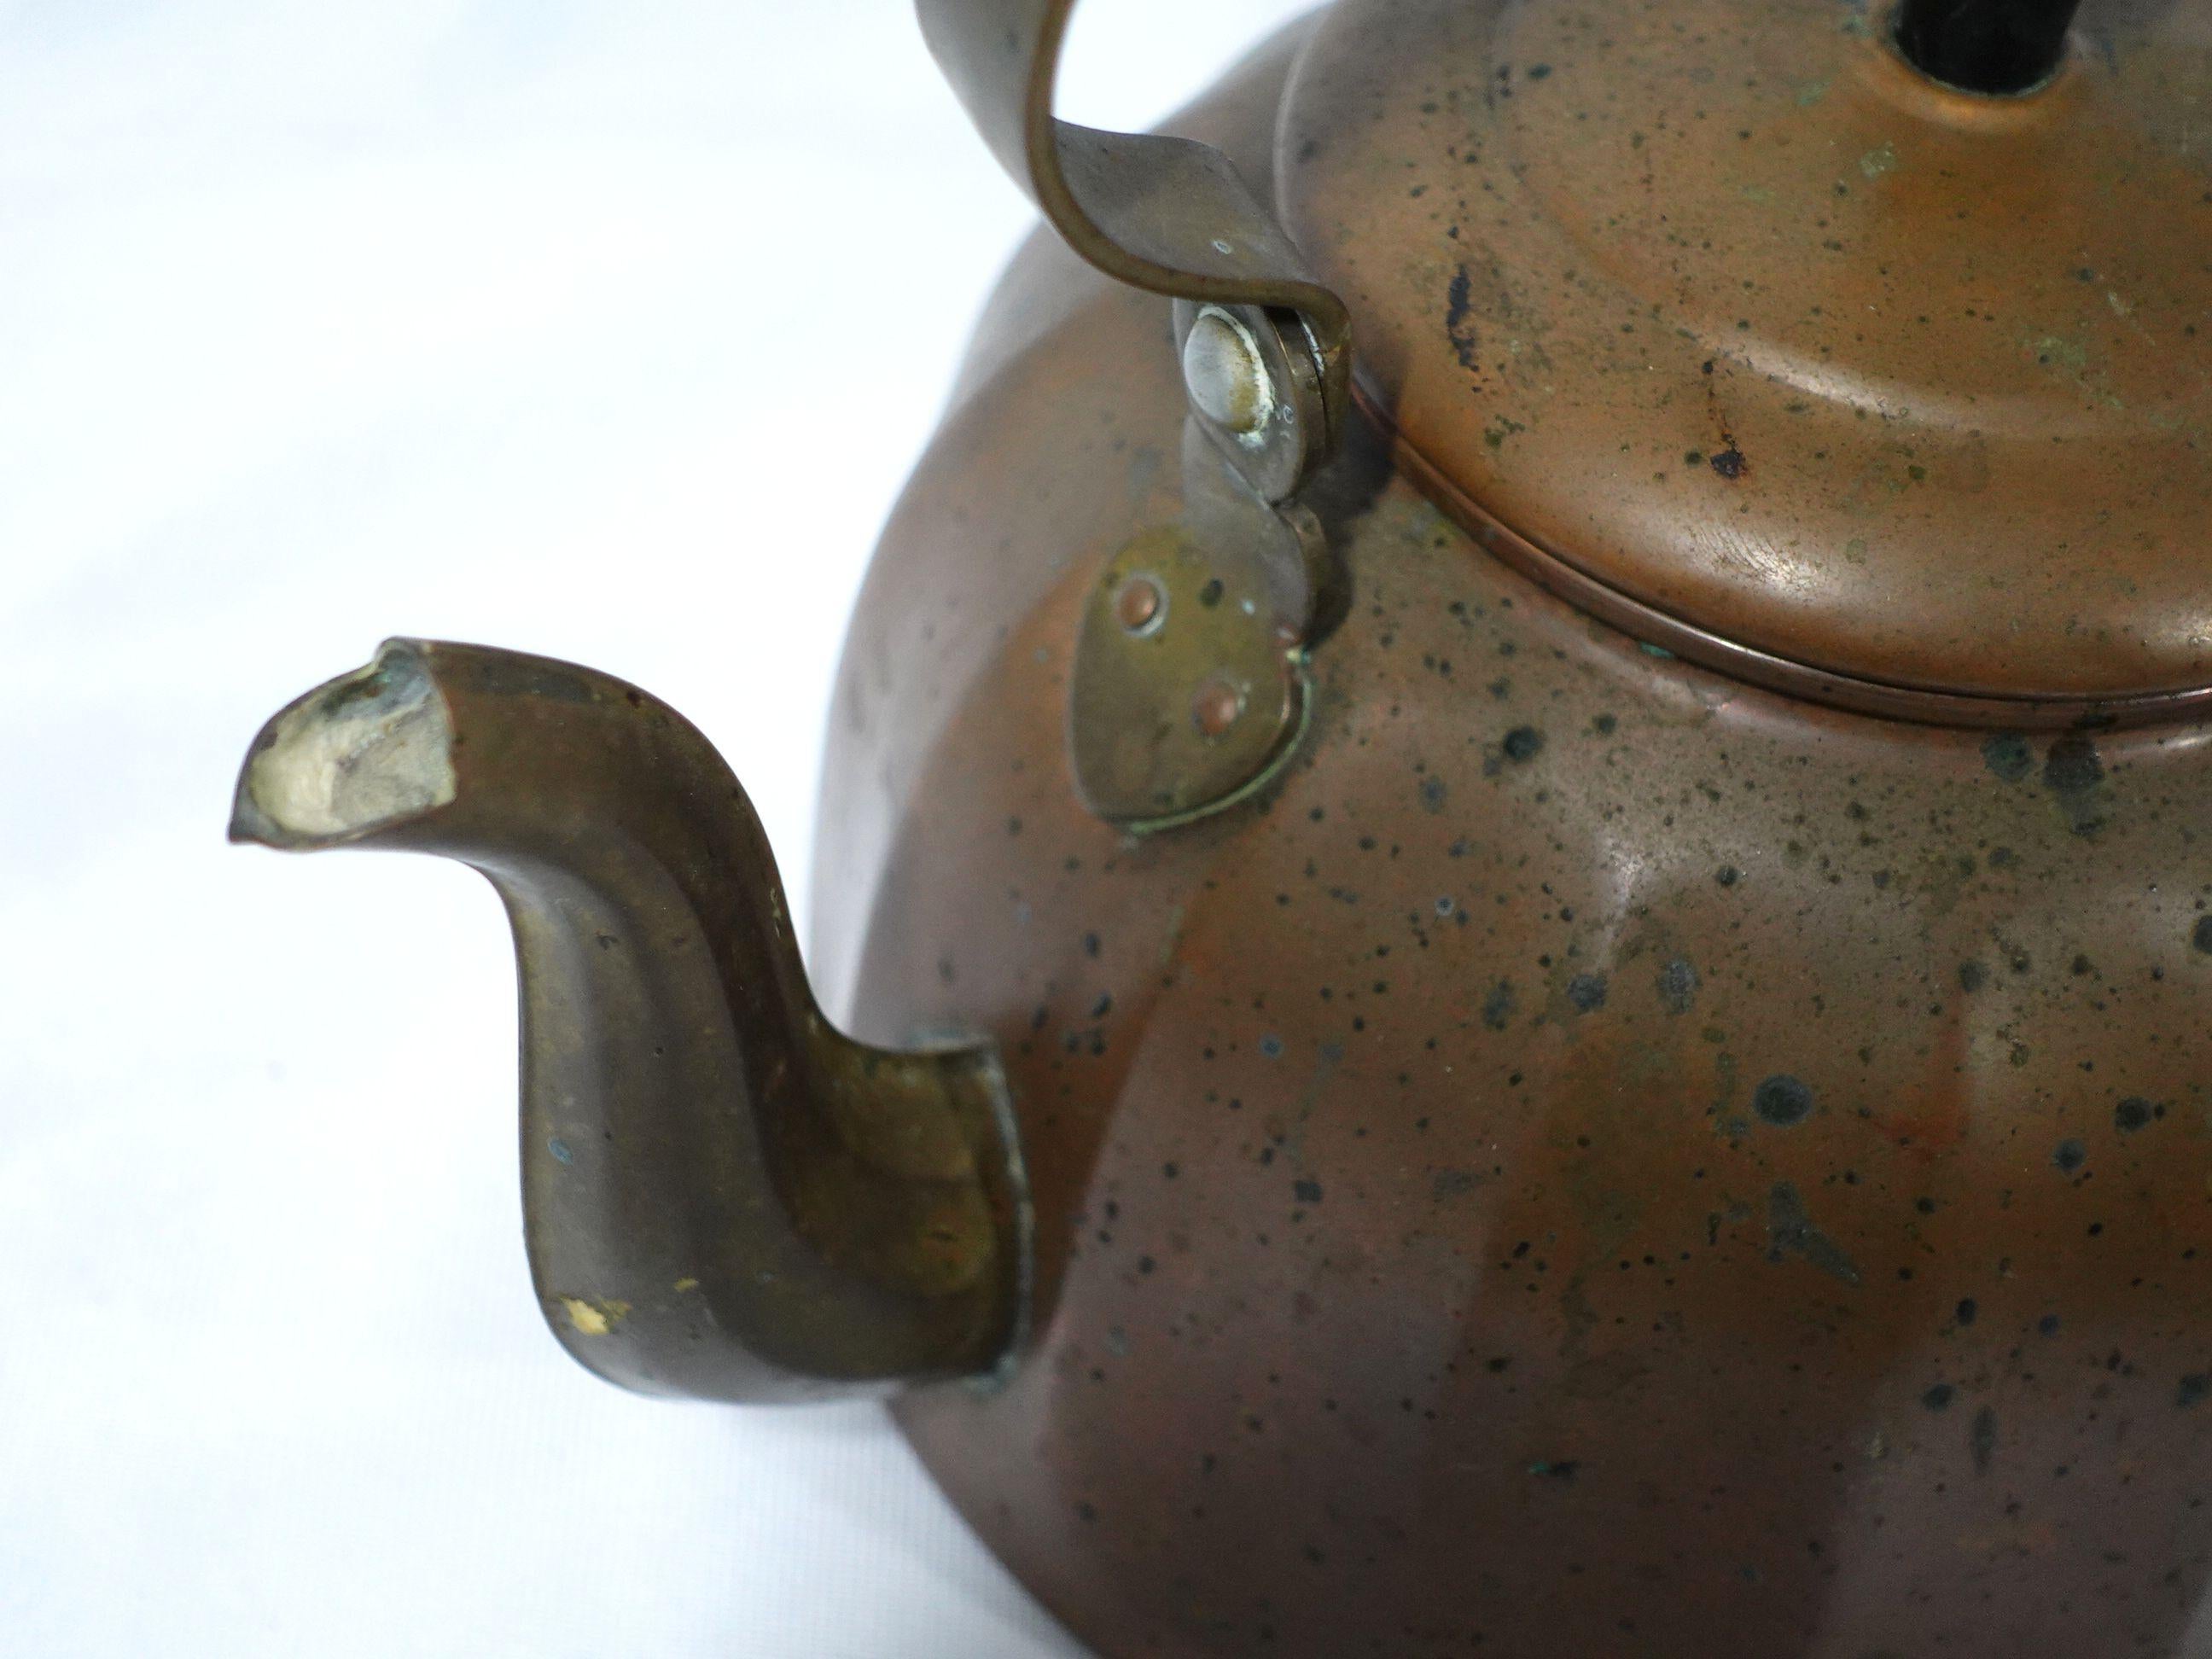 Antique A English Shaped Copper Tea Kettle 